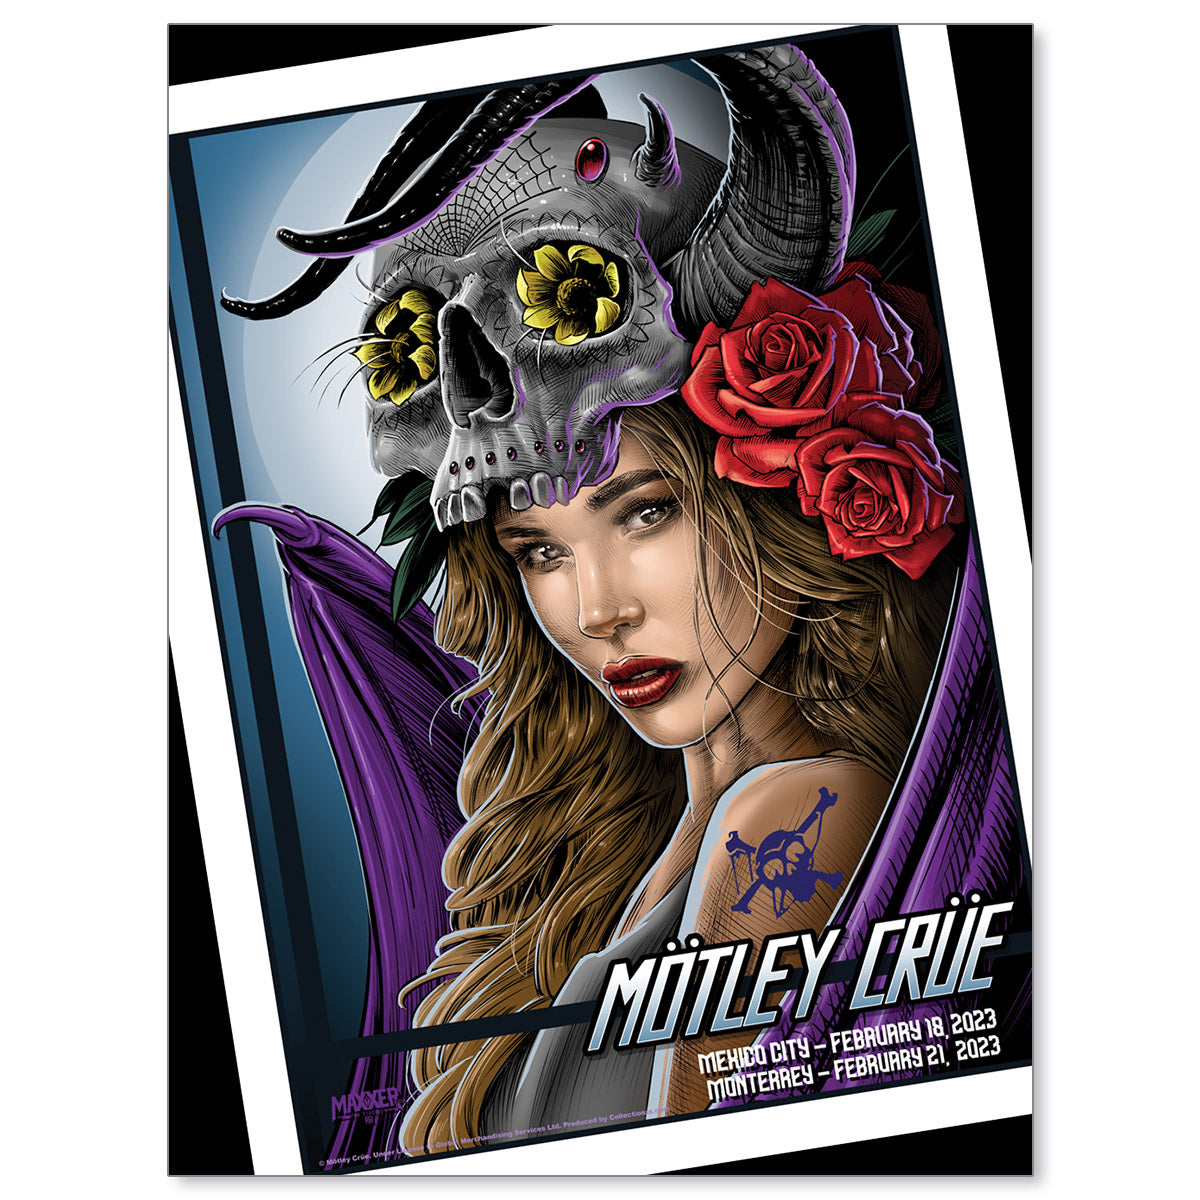 Mötley Crüe February 18 & 21, 2023 Mexico City/Monterrey The World Tour